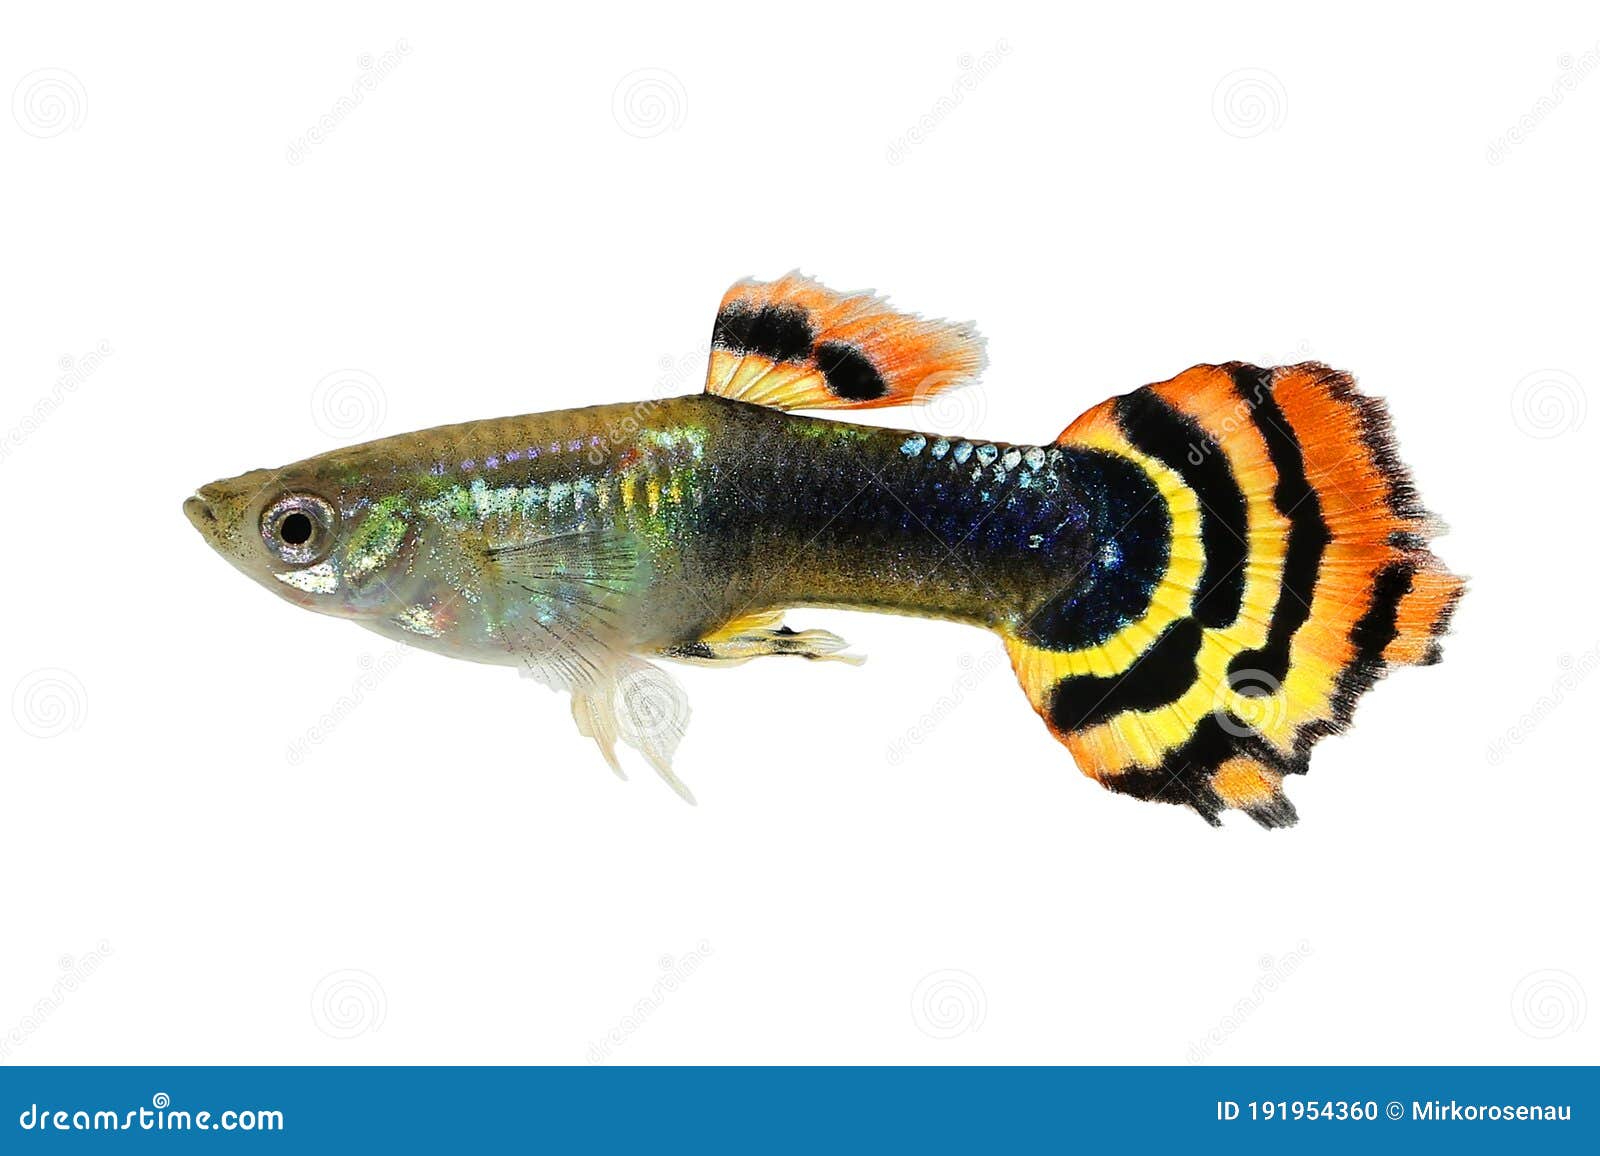 Dragon Head Guppy Aquarium Fish Poecilia Reticulata Stock Photo - Image of  food, animal: 191954360